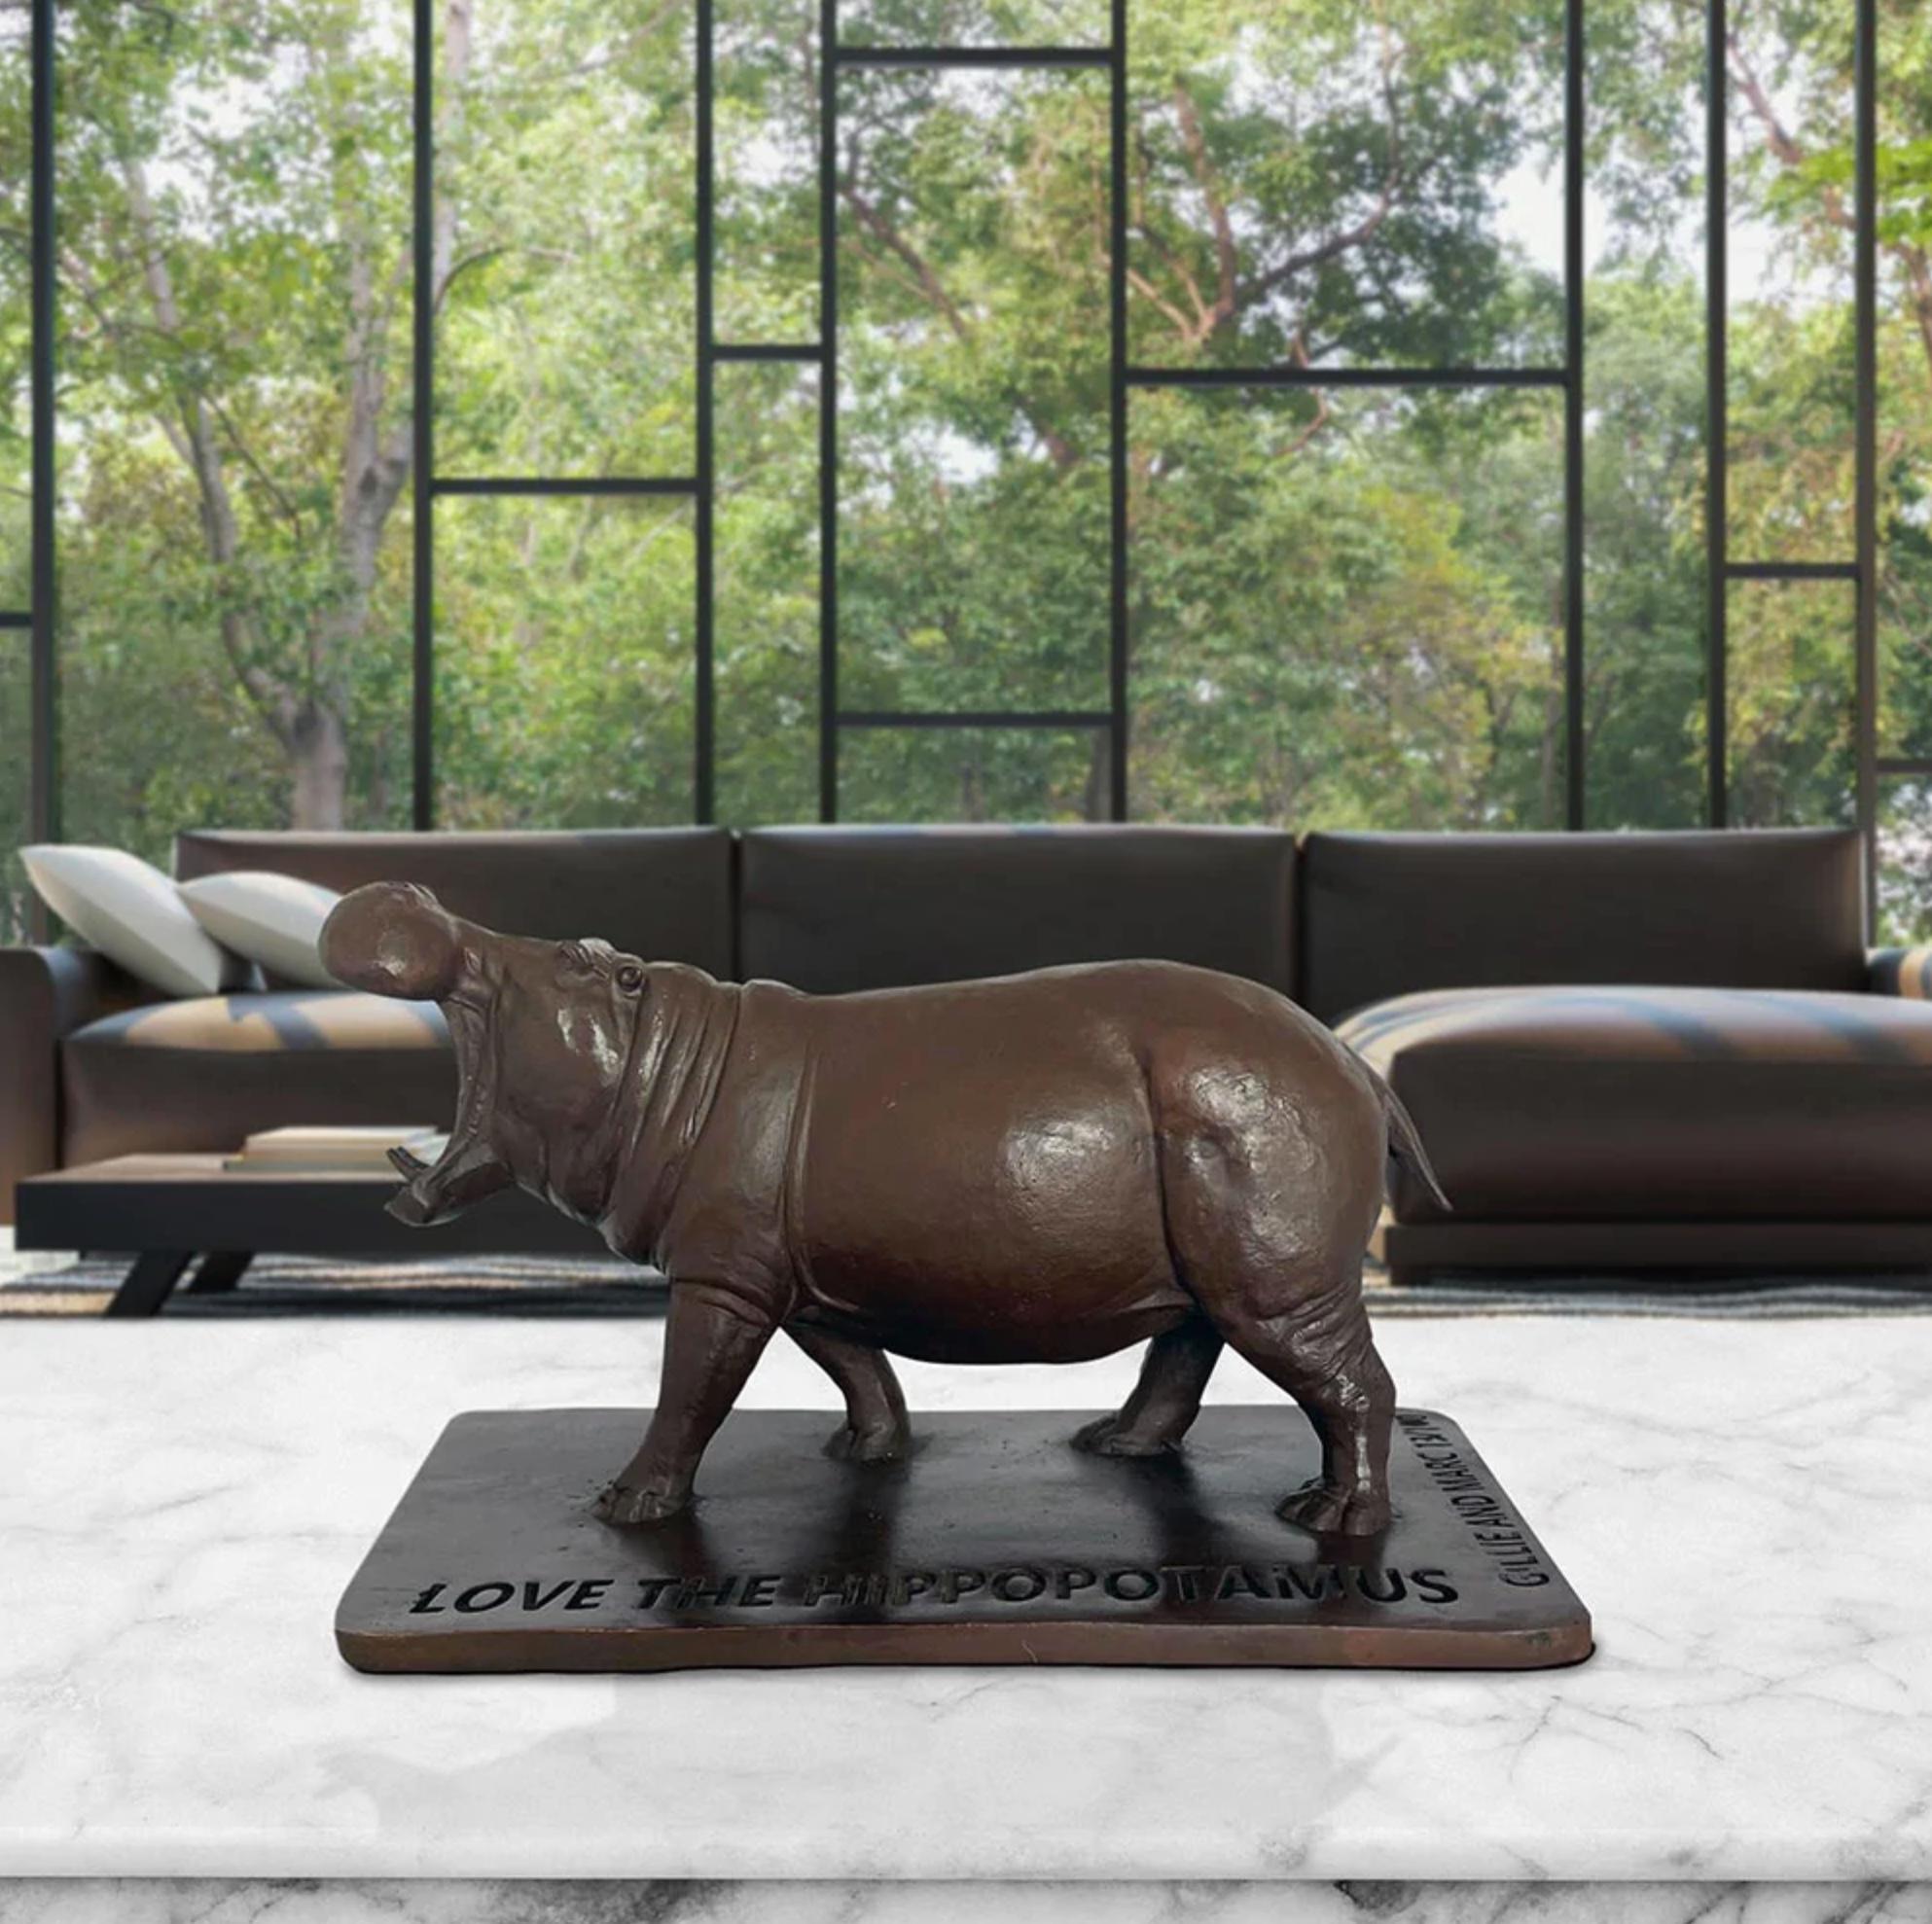 Authentic Bronze Love the Hippopotamus Sculpture by Gillie and Marc - Gold Figurative Sculpture by Gillie and Marc Schattner